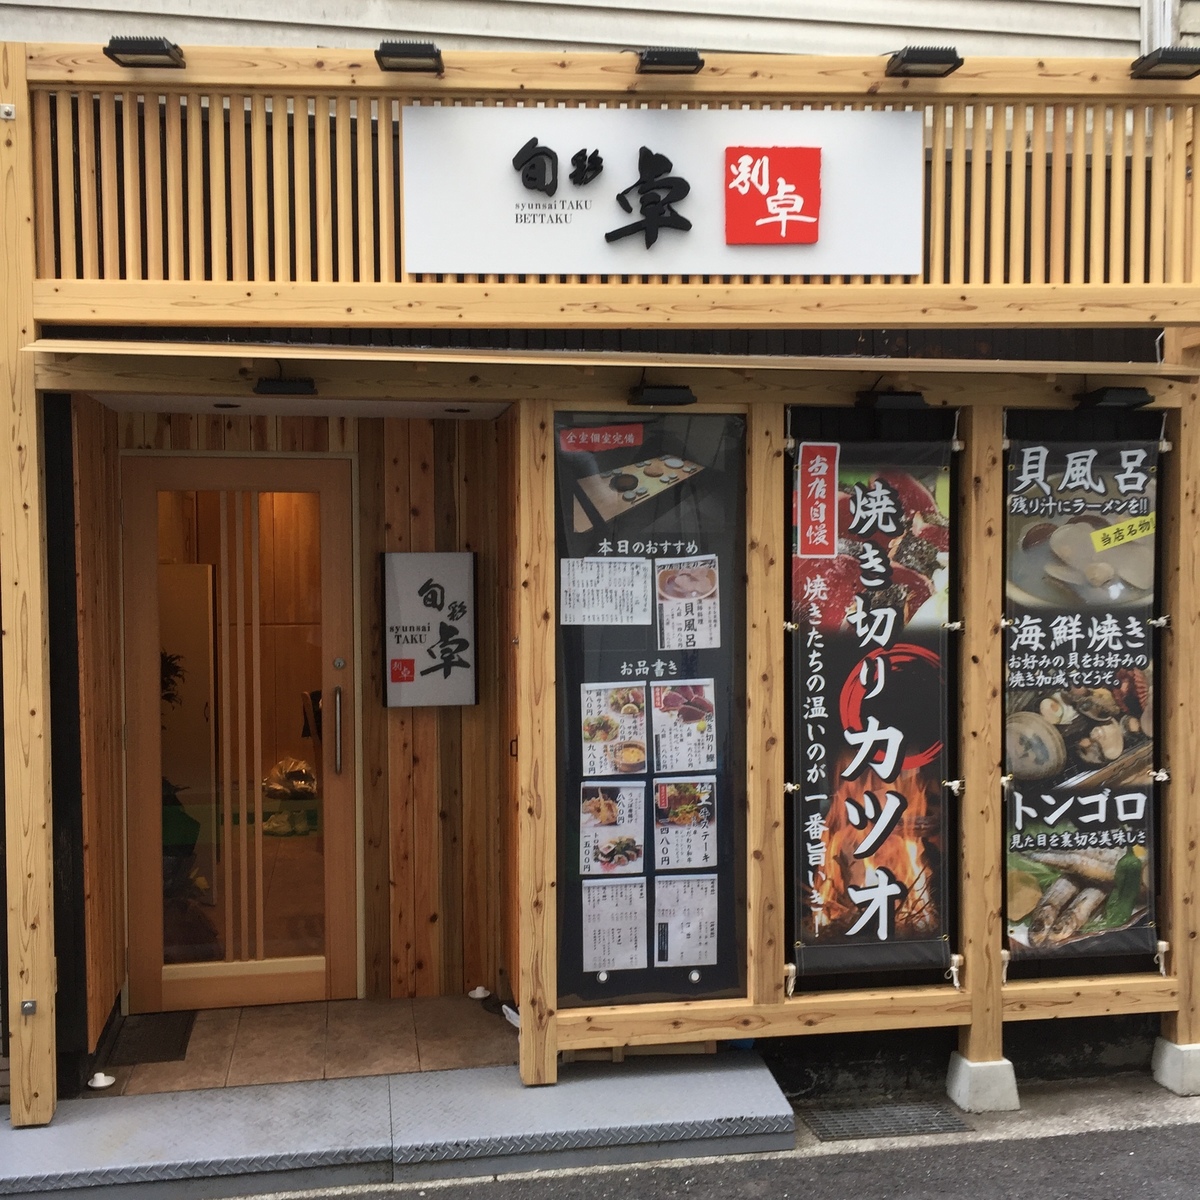 The 2nd shop of Shunka Taku [separate table]